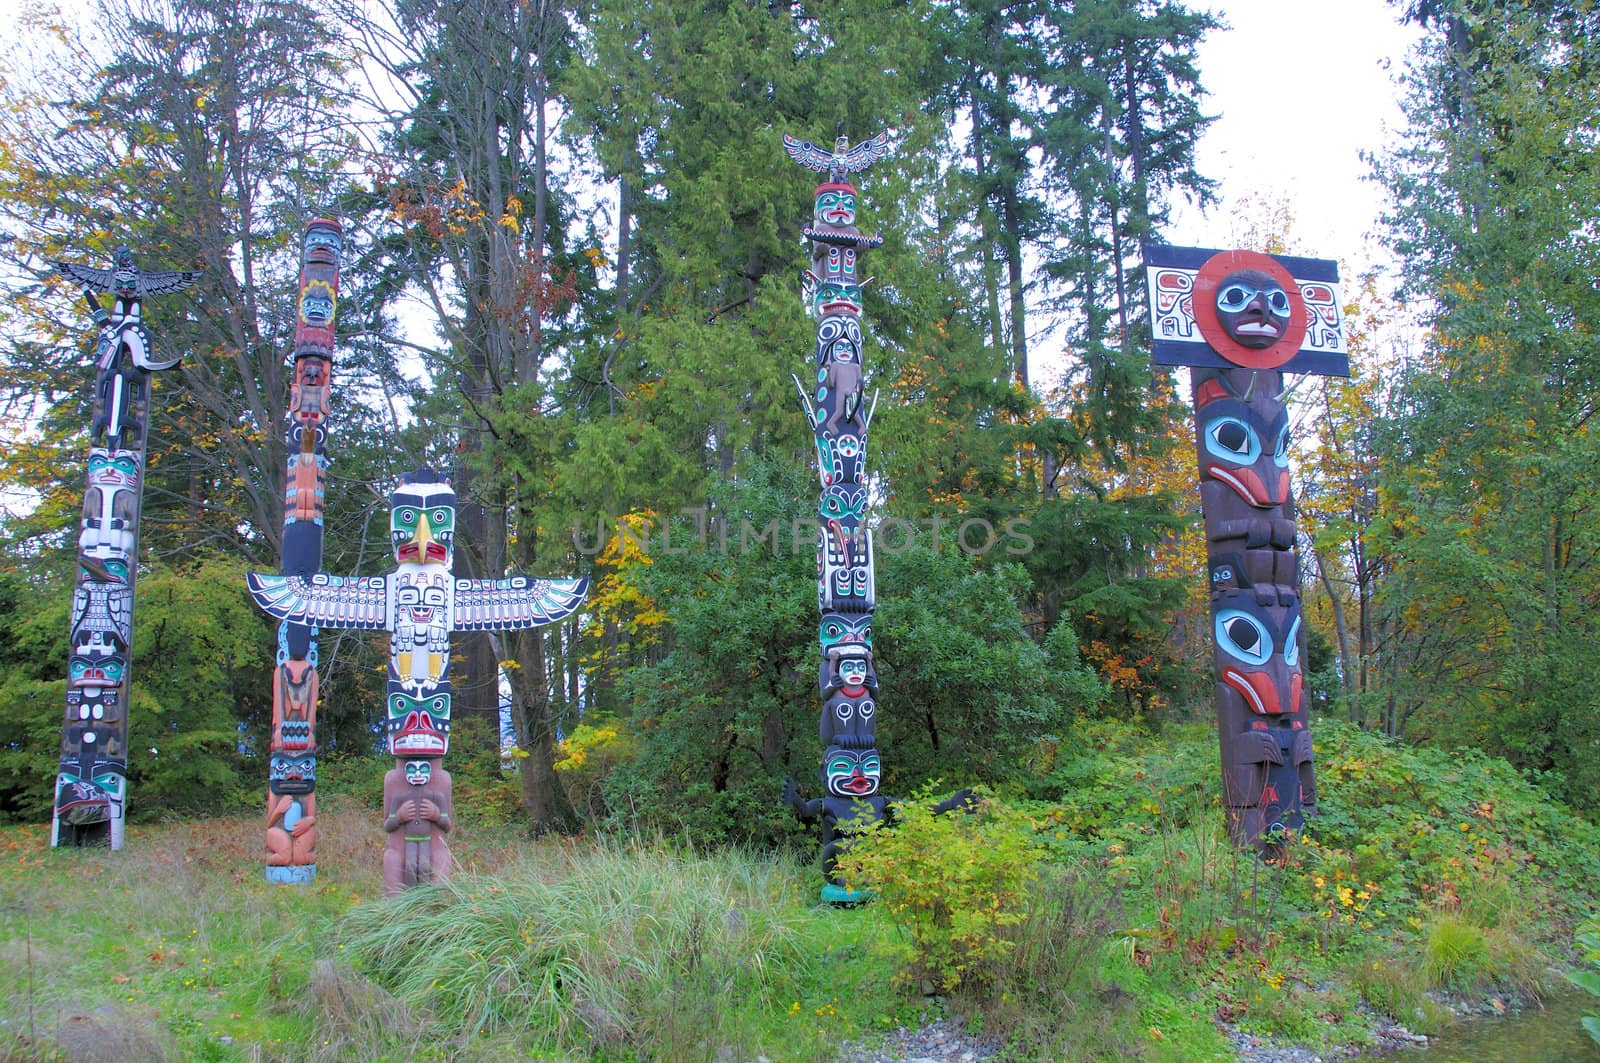 Totem poles in Stanley Park in Vancouver, Canada